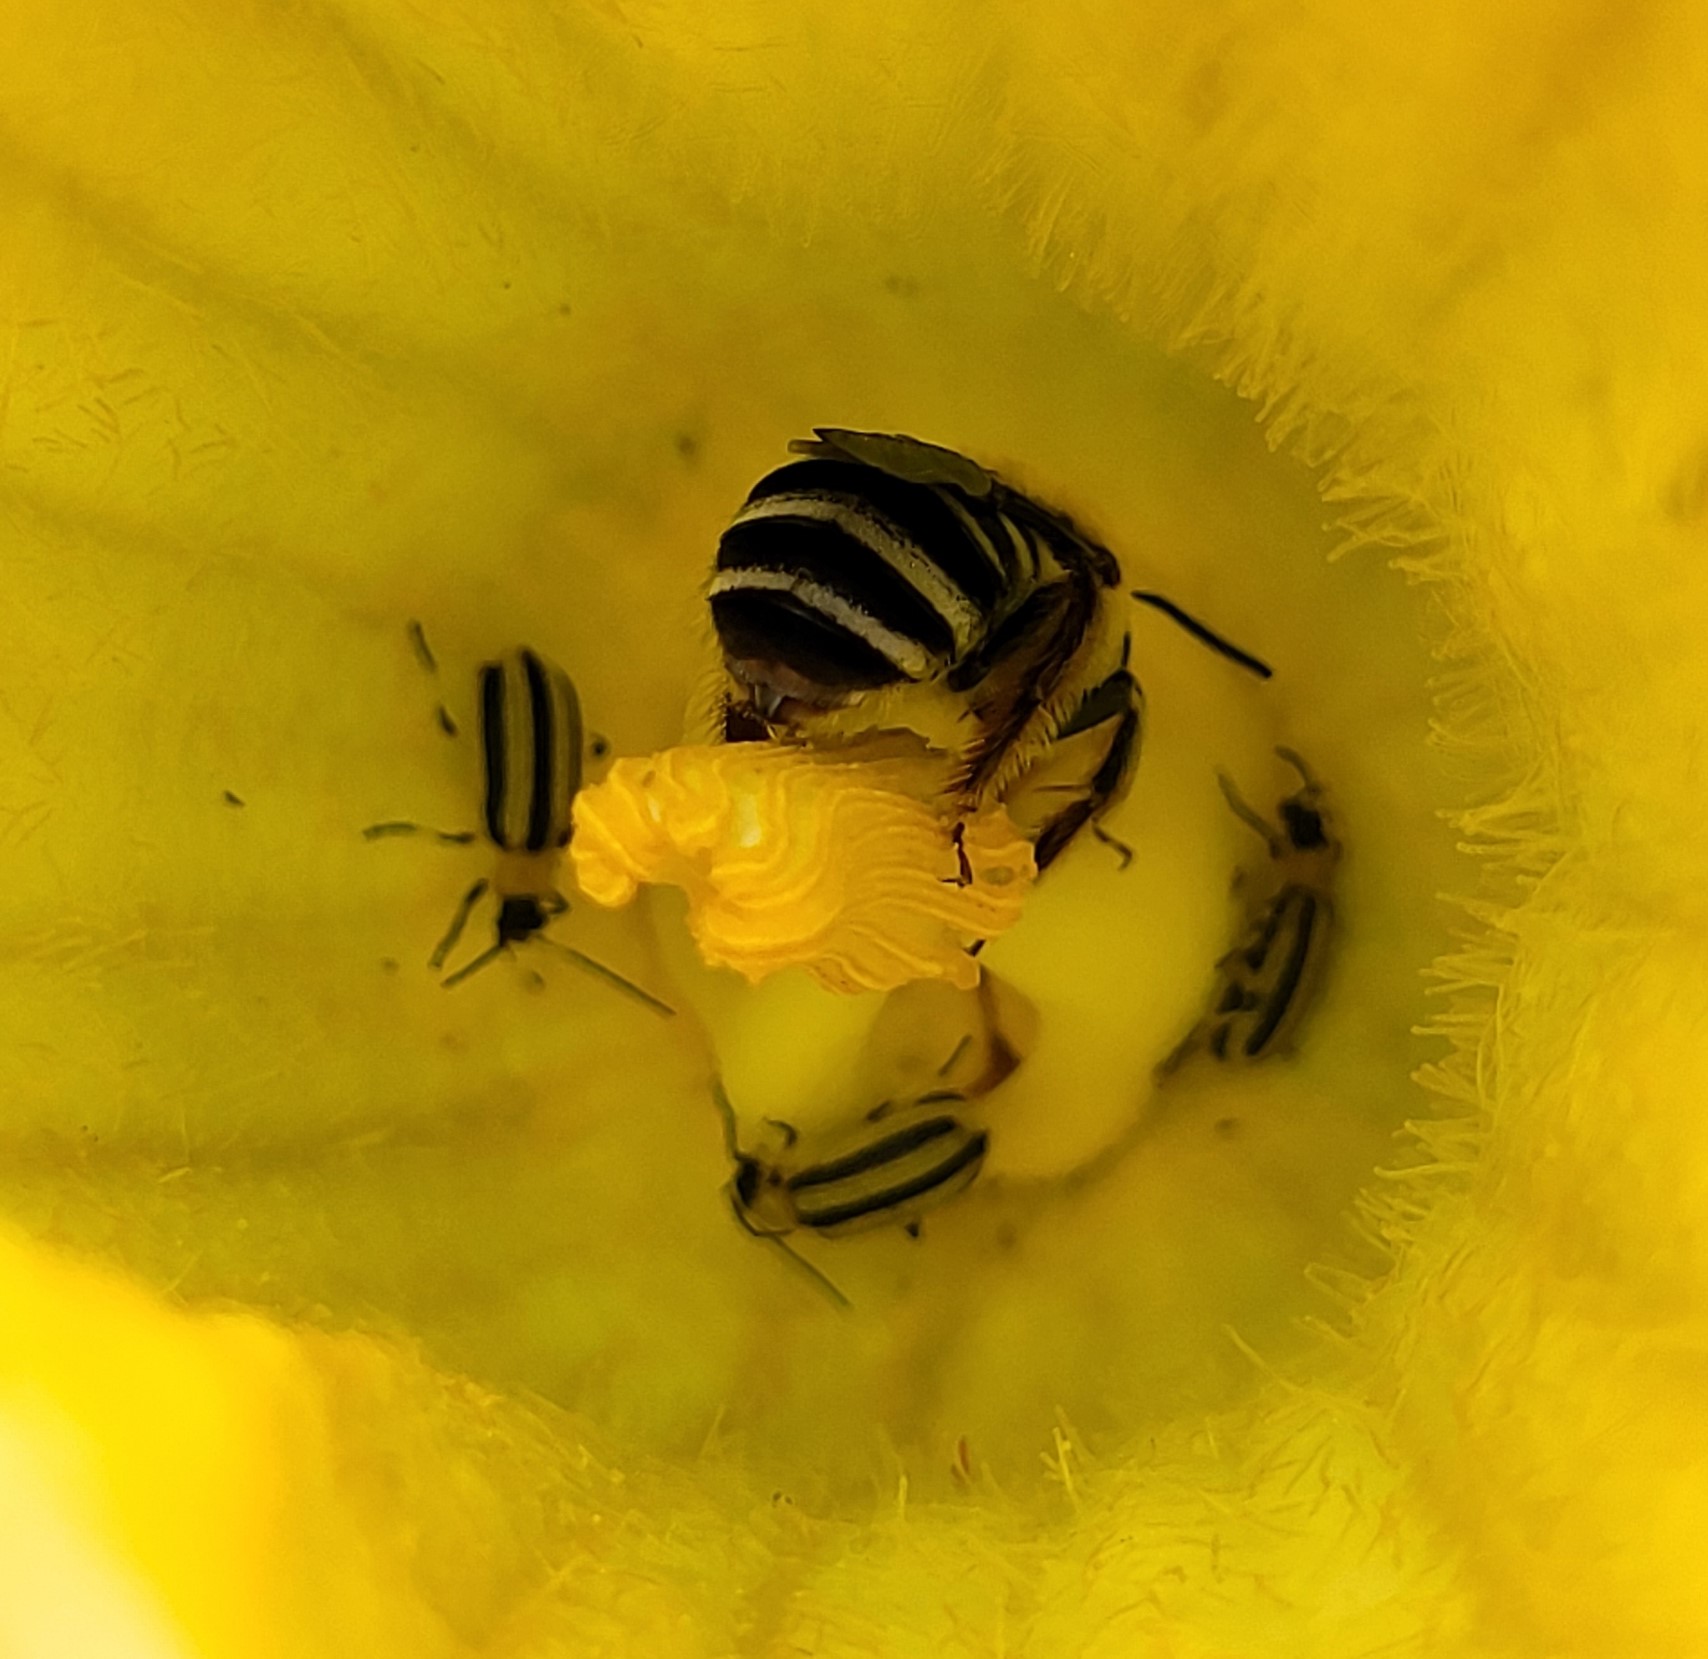 Striped cucumber beetles inside a squash flower.